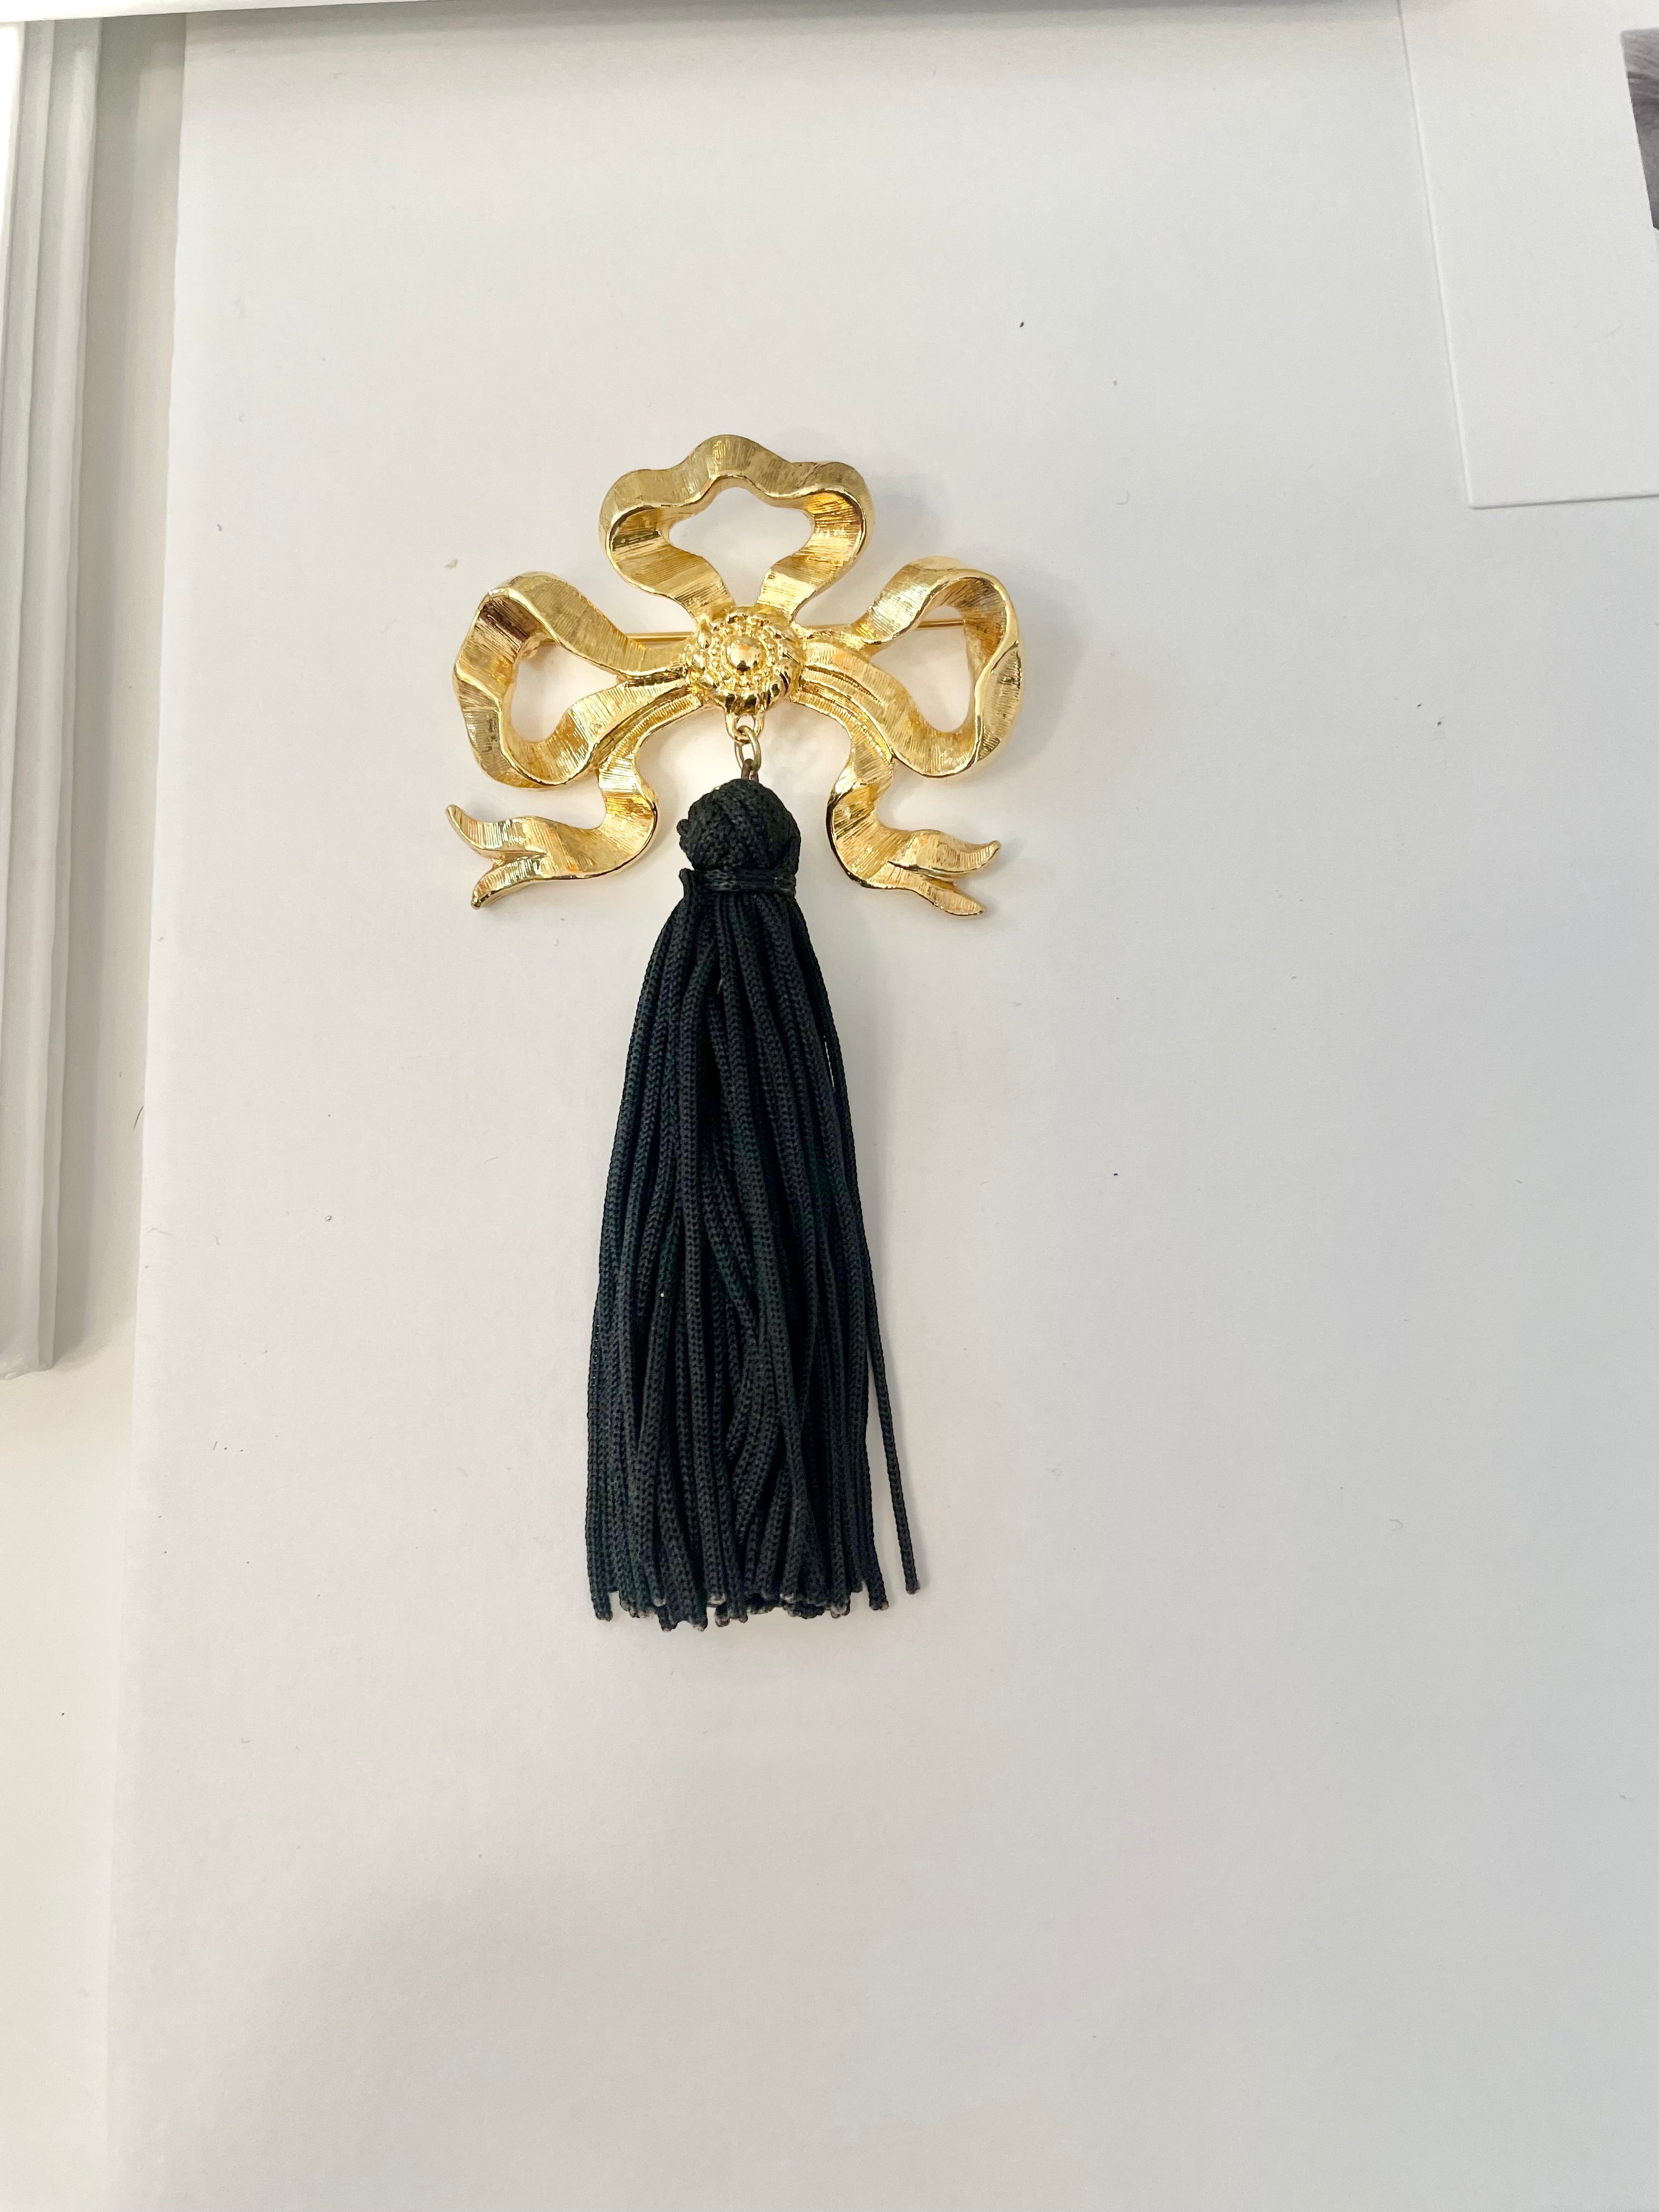 1970's super chic, gold bow tassel brooch..absolutely elegant!